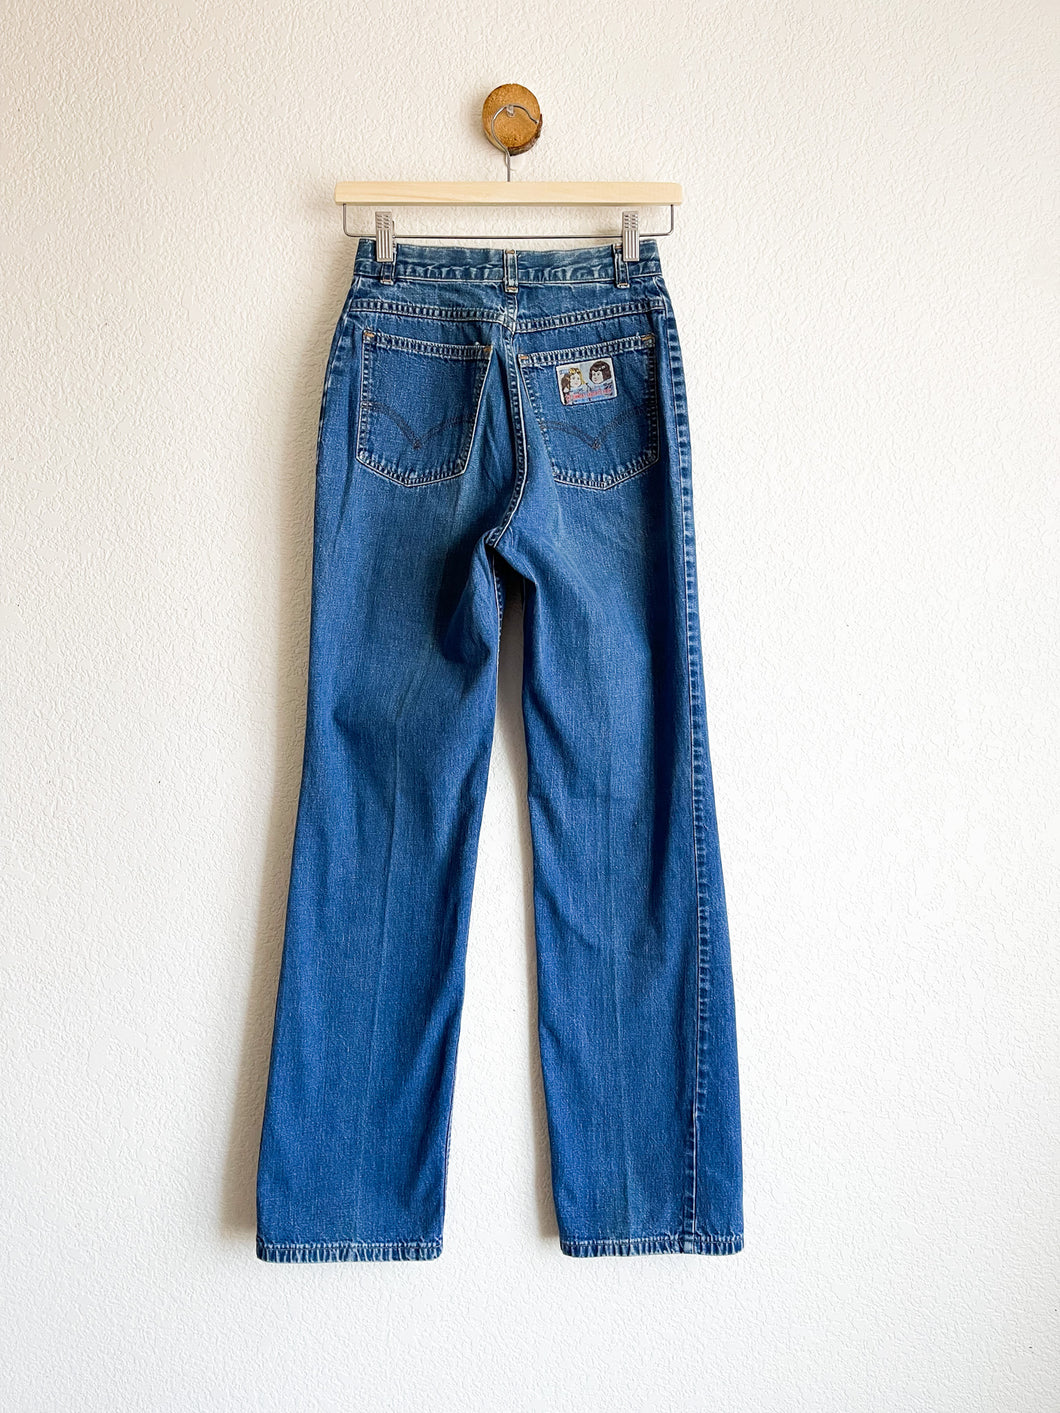 Vintage Levi's Owner's Favorite Pair Jeans - 25